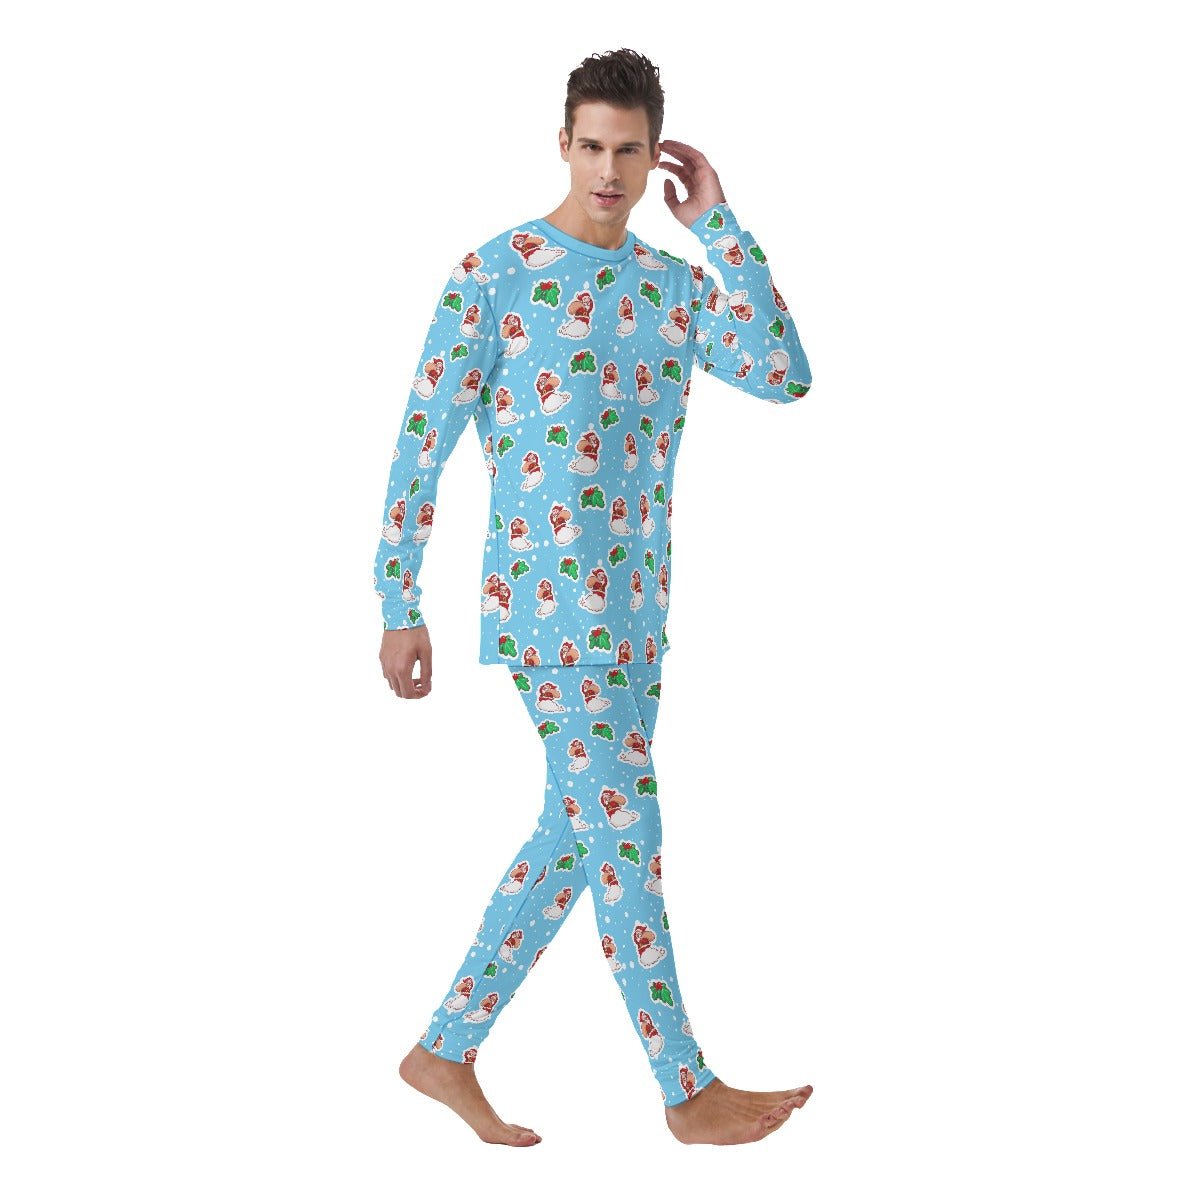 Men's Christmas Pyjamas - Santa Cloud - Festive Style